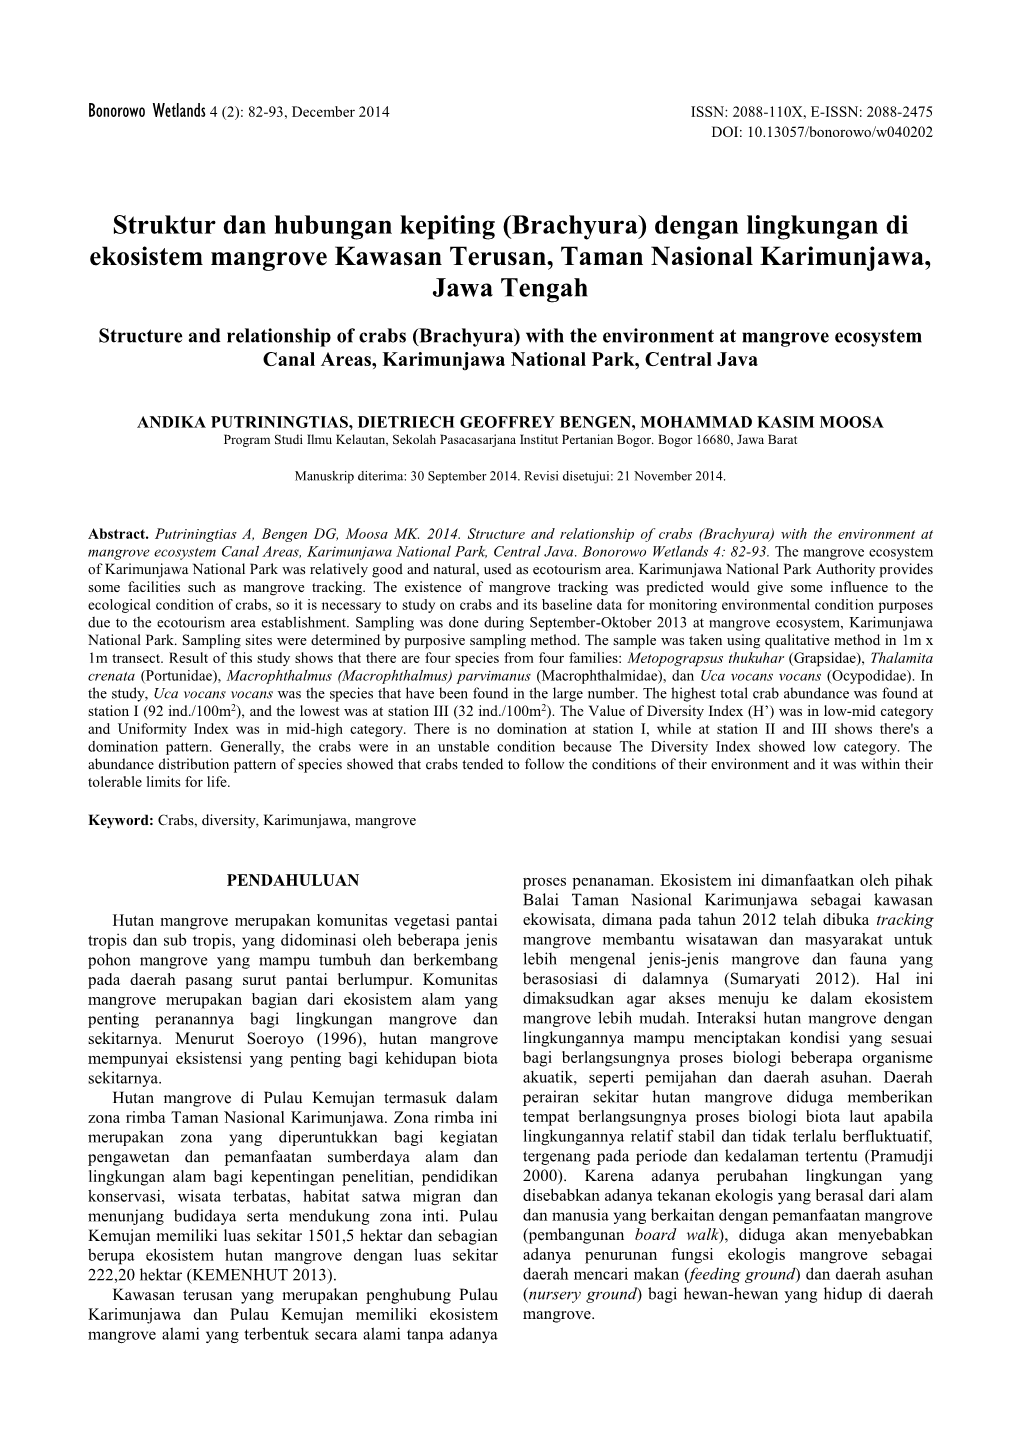 Struktur Dan Hubungan Kepiting (Brachyura) Dengan Lingkungan Di Ekosistem Mangrove Kawasan Terusan, Taman Nasional Karimunjawa, Jawa Tengah